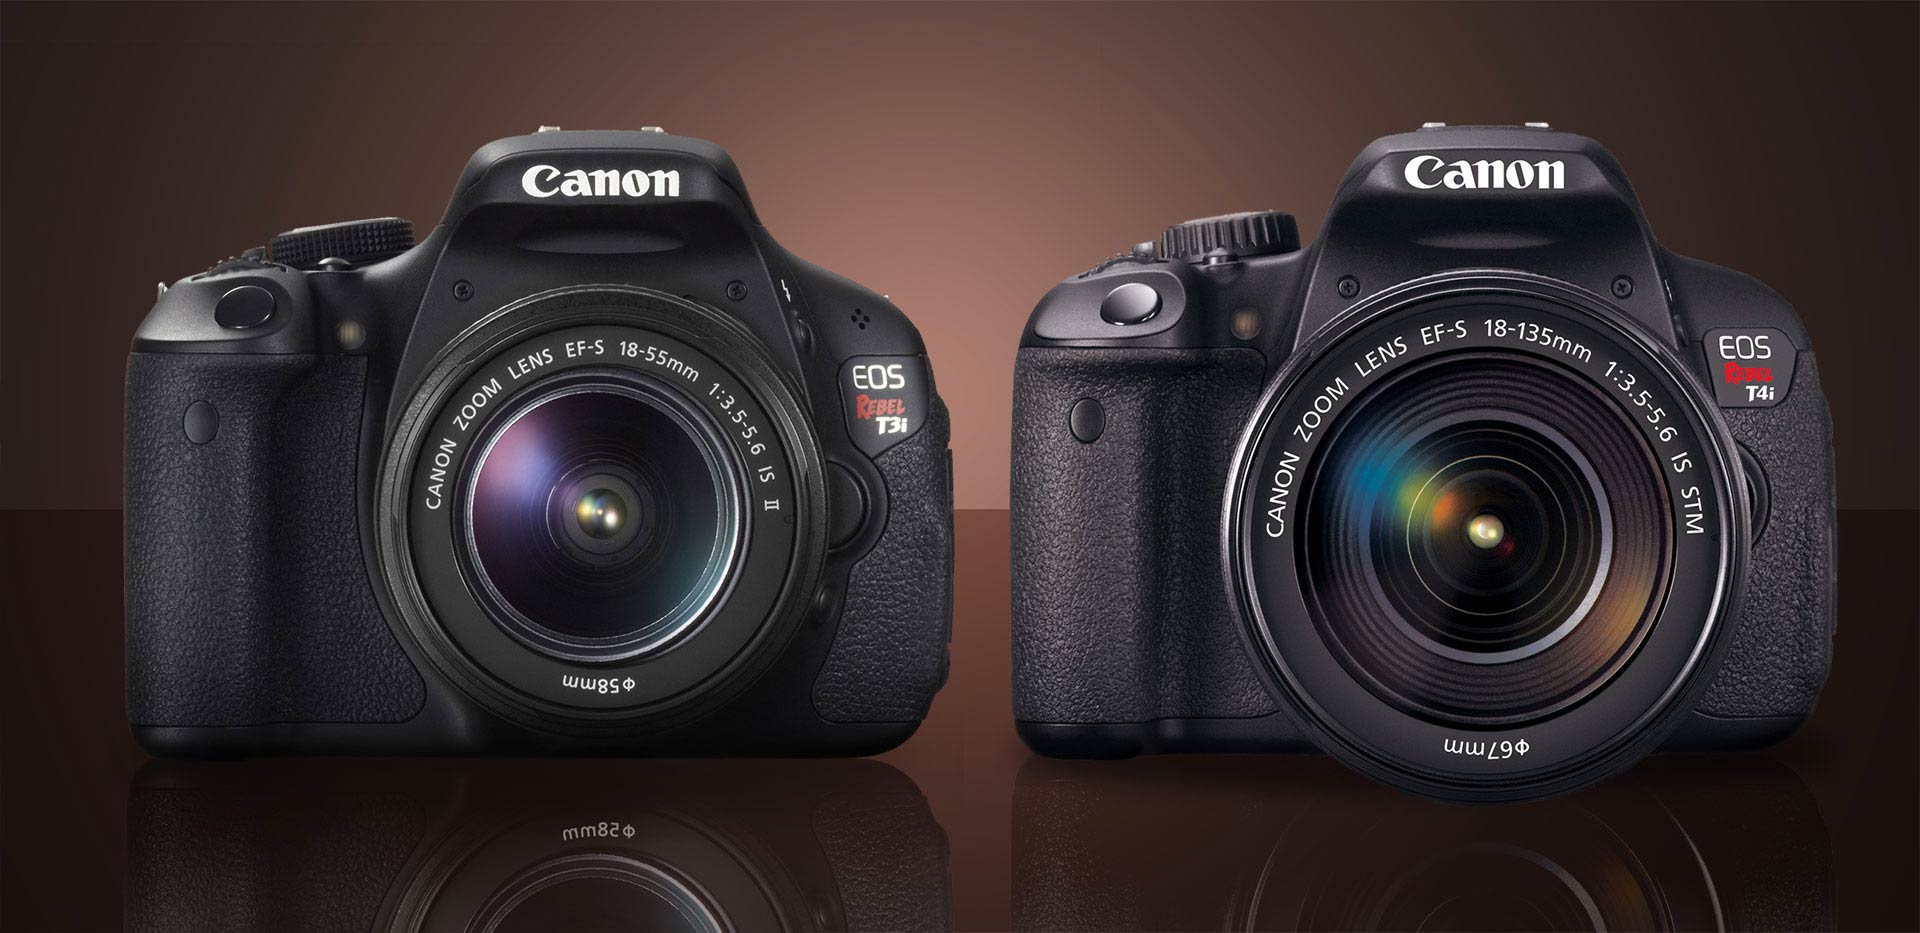 Canon T4i vs T3i